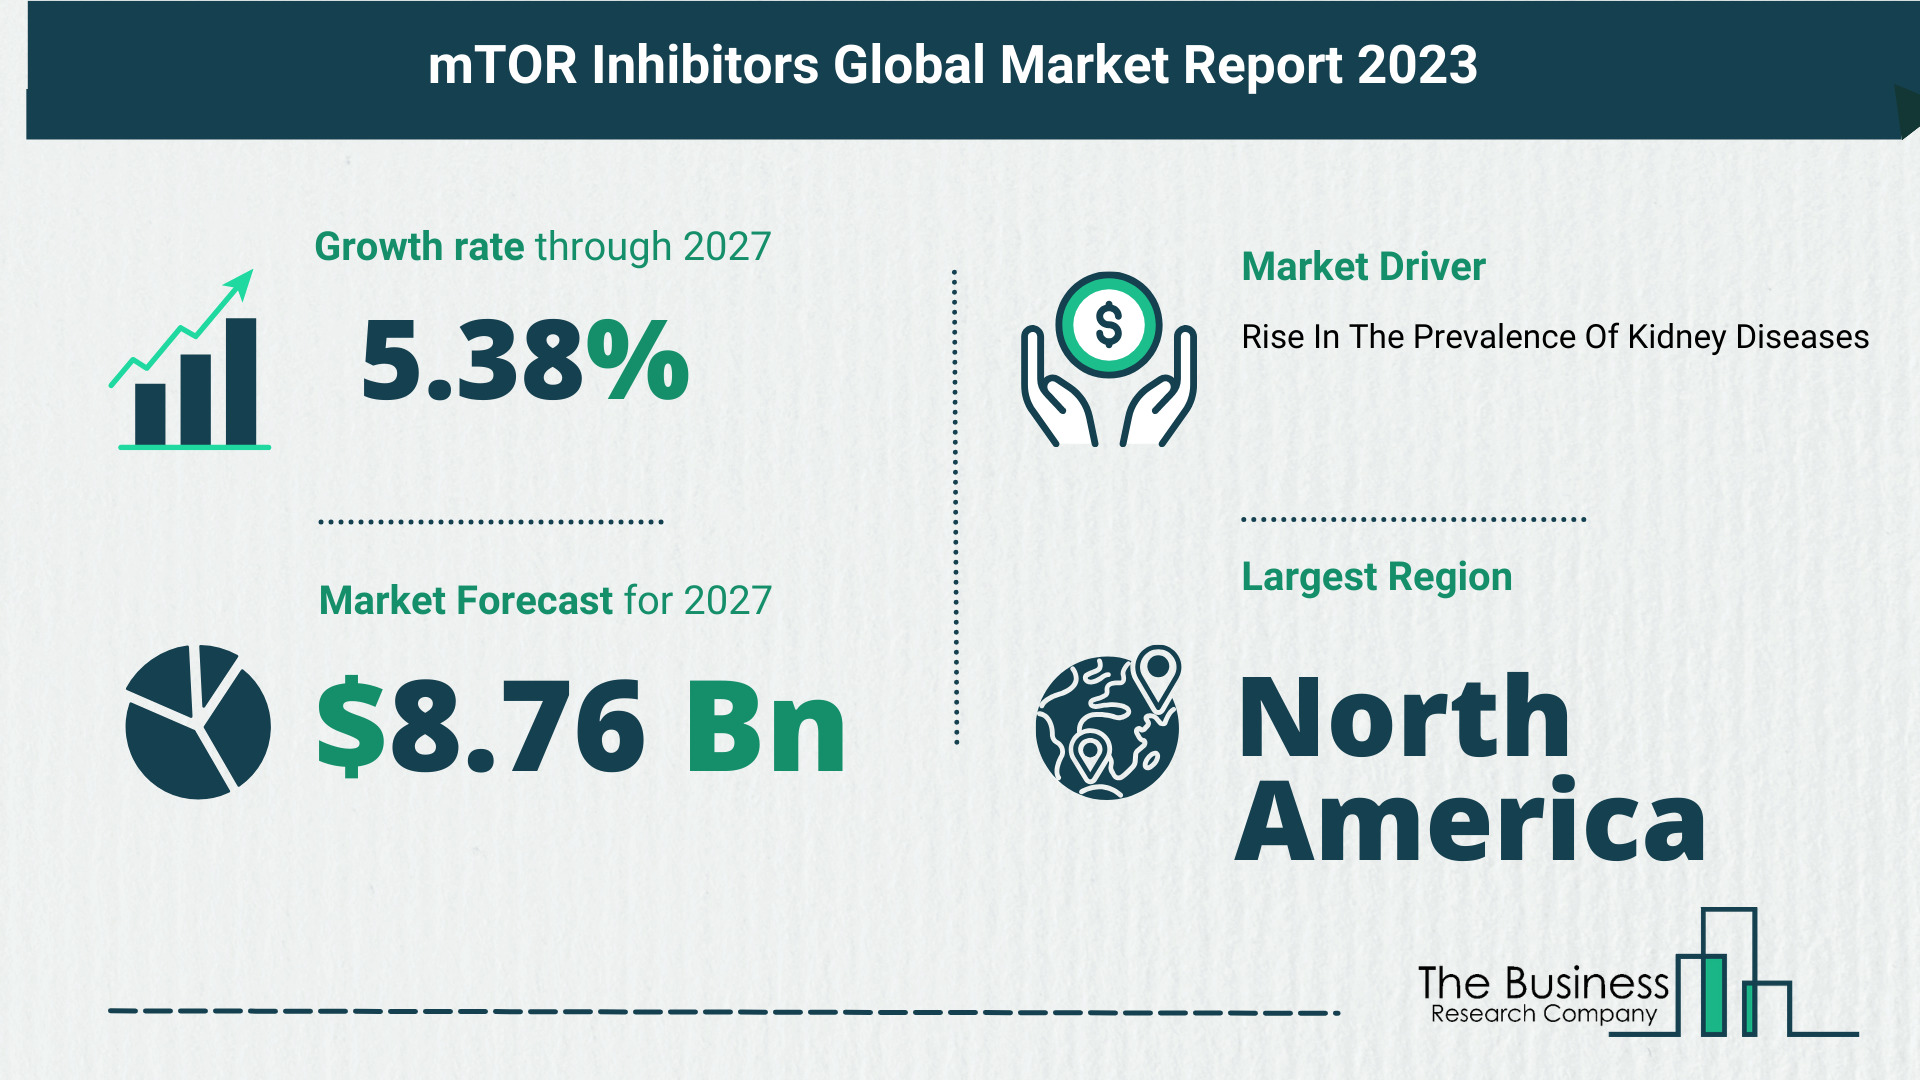 Global MTOR Inhibitors Market